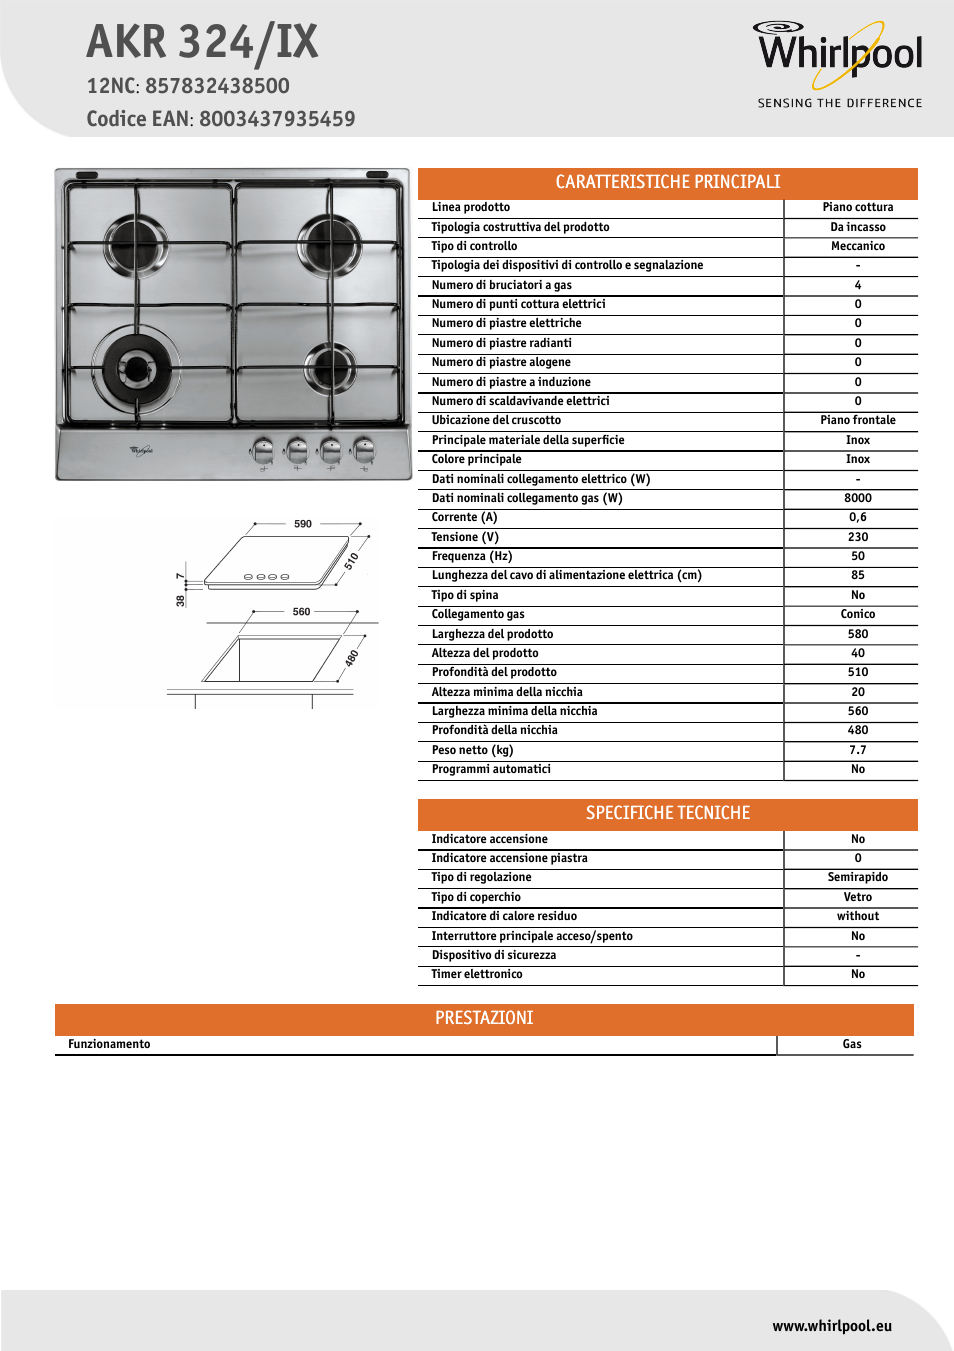 Whirlpool AKR 324-IX Manuale d'uso | Pagine: 1